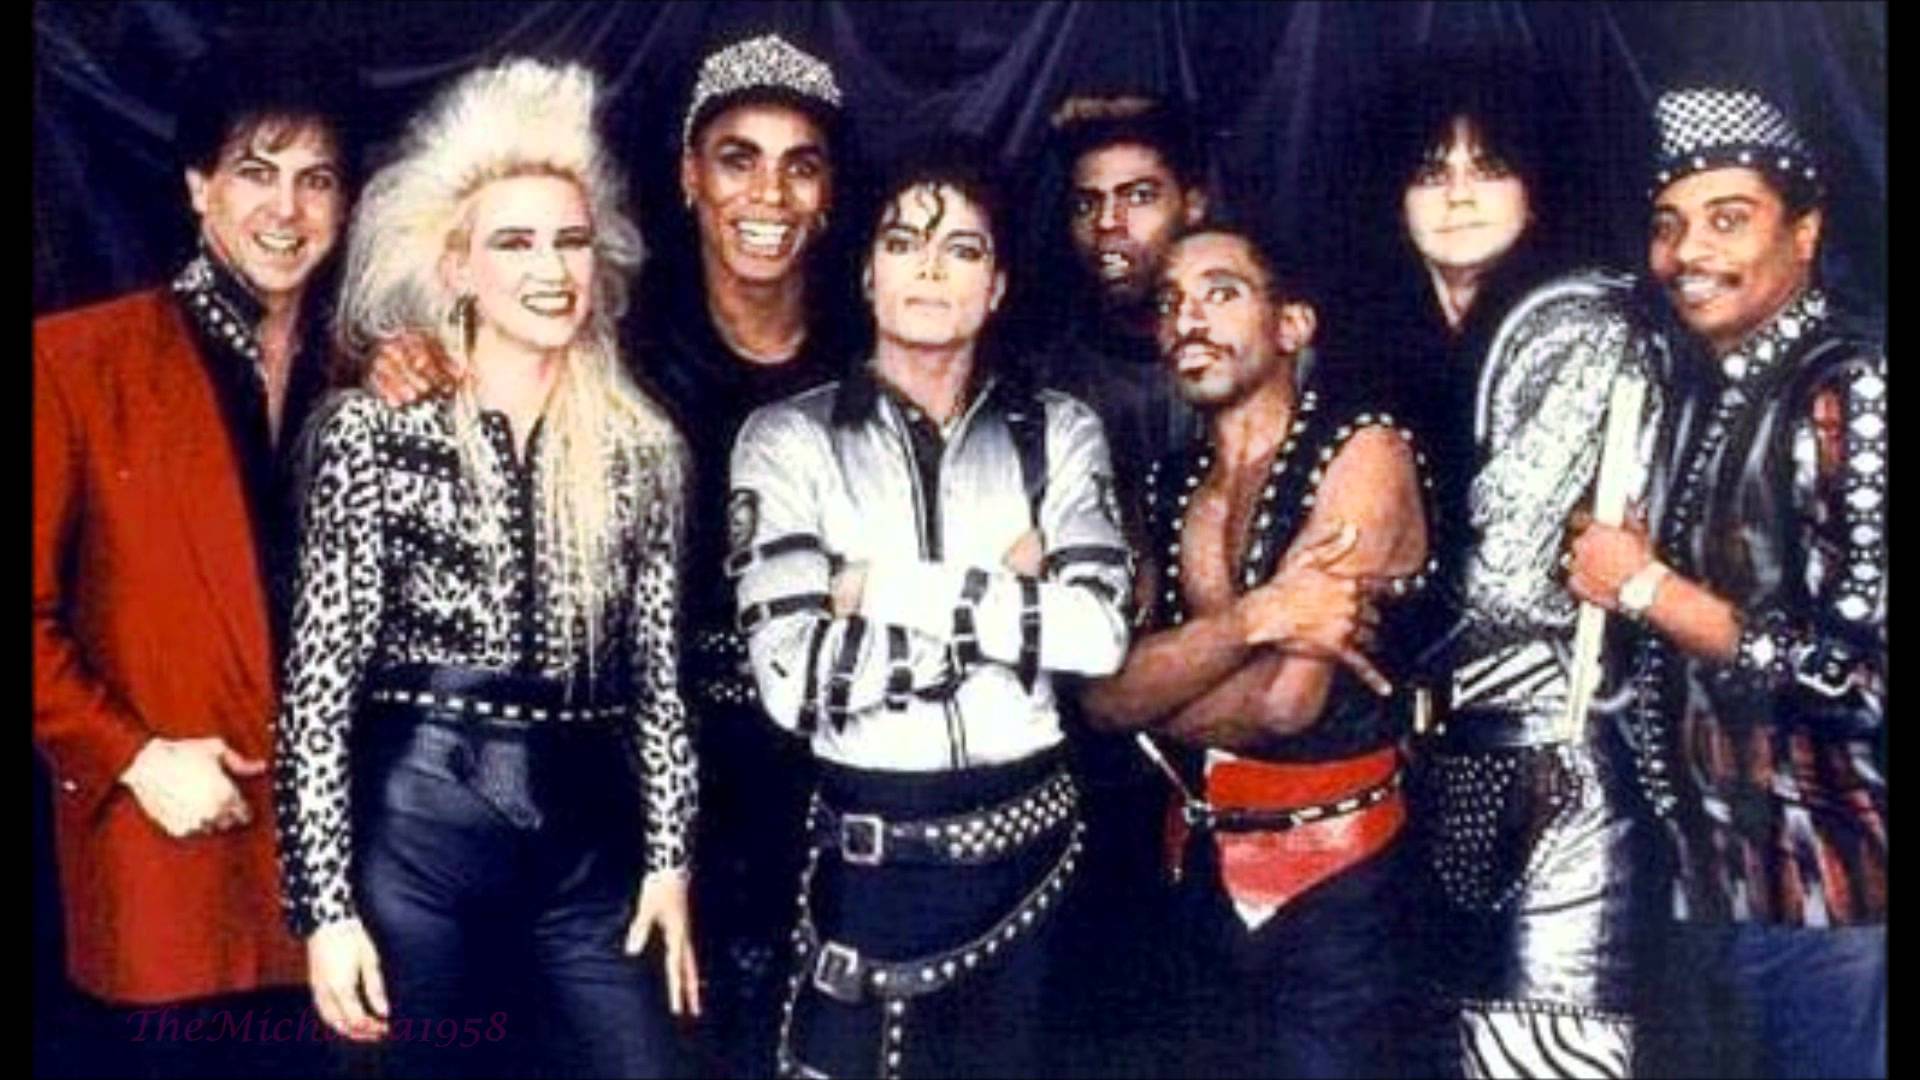 Michael Jackson With You Bad Tour 1987 (Audio)